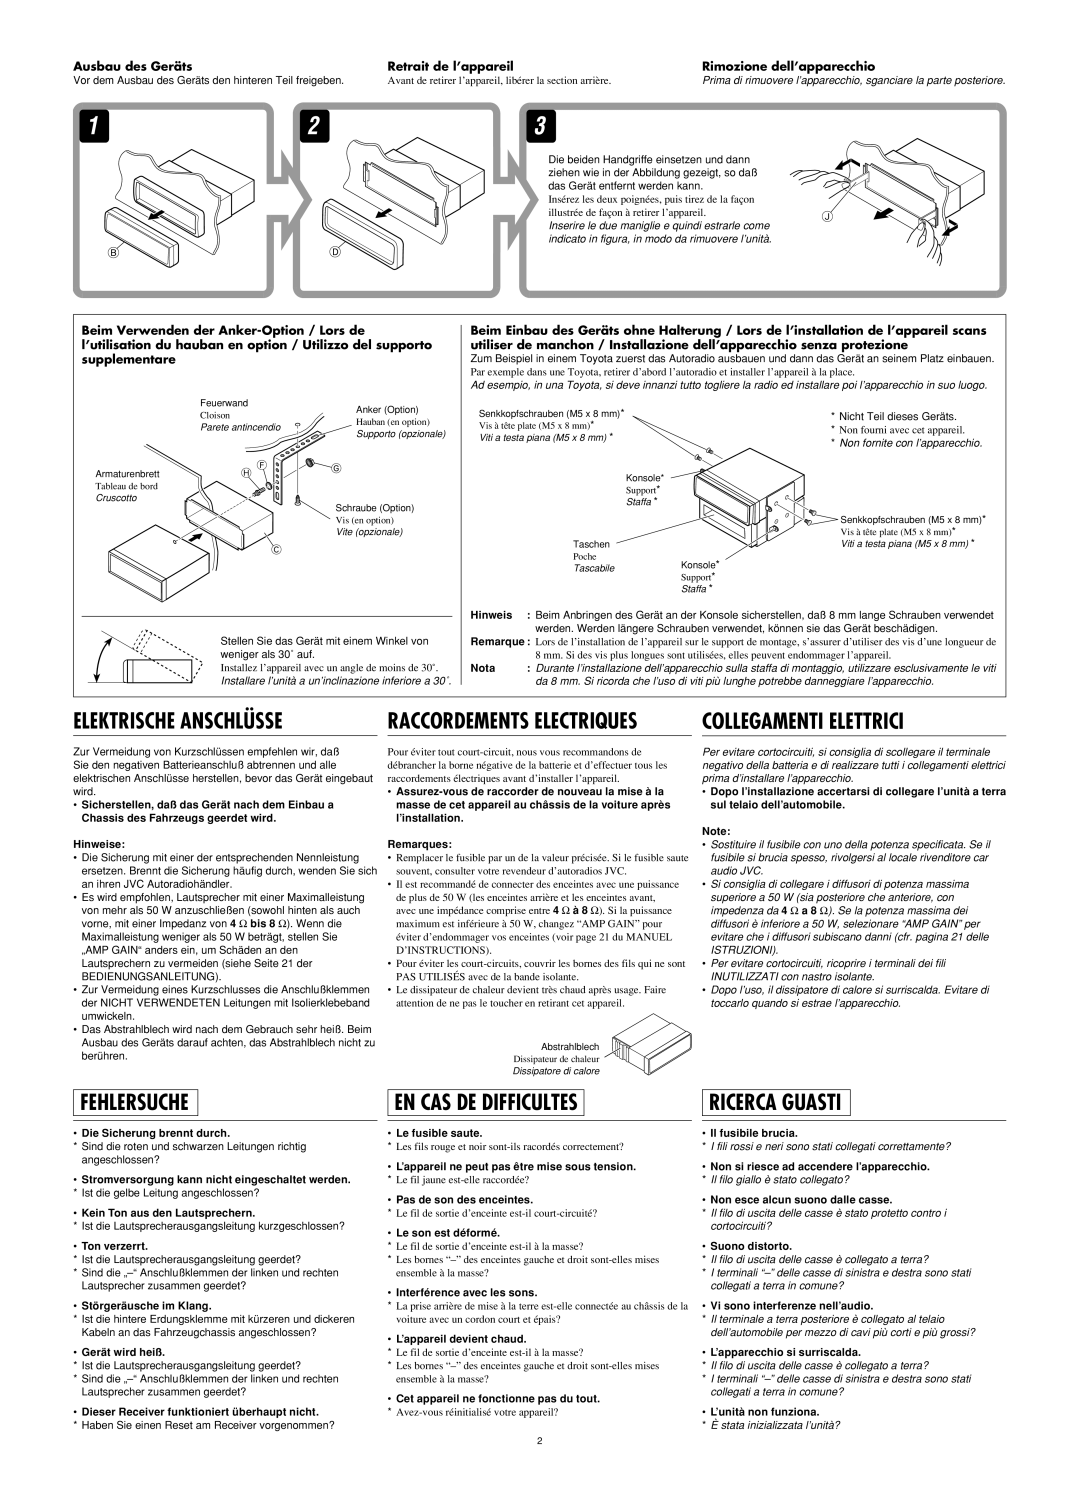 Panasonic KD-G311 Collegamenti Elettrici, Fehlersuche, Elektrische Anschlüsse, Raccordements Electriques, Ricerca Guasti 